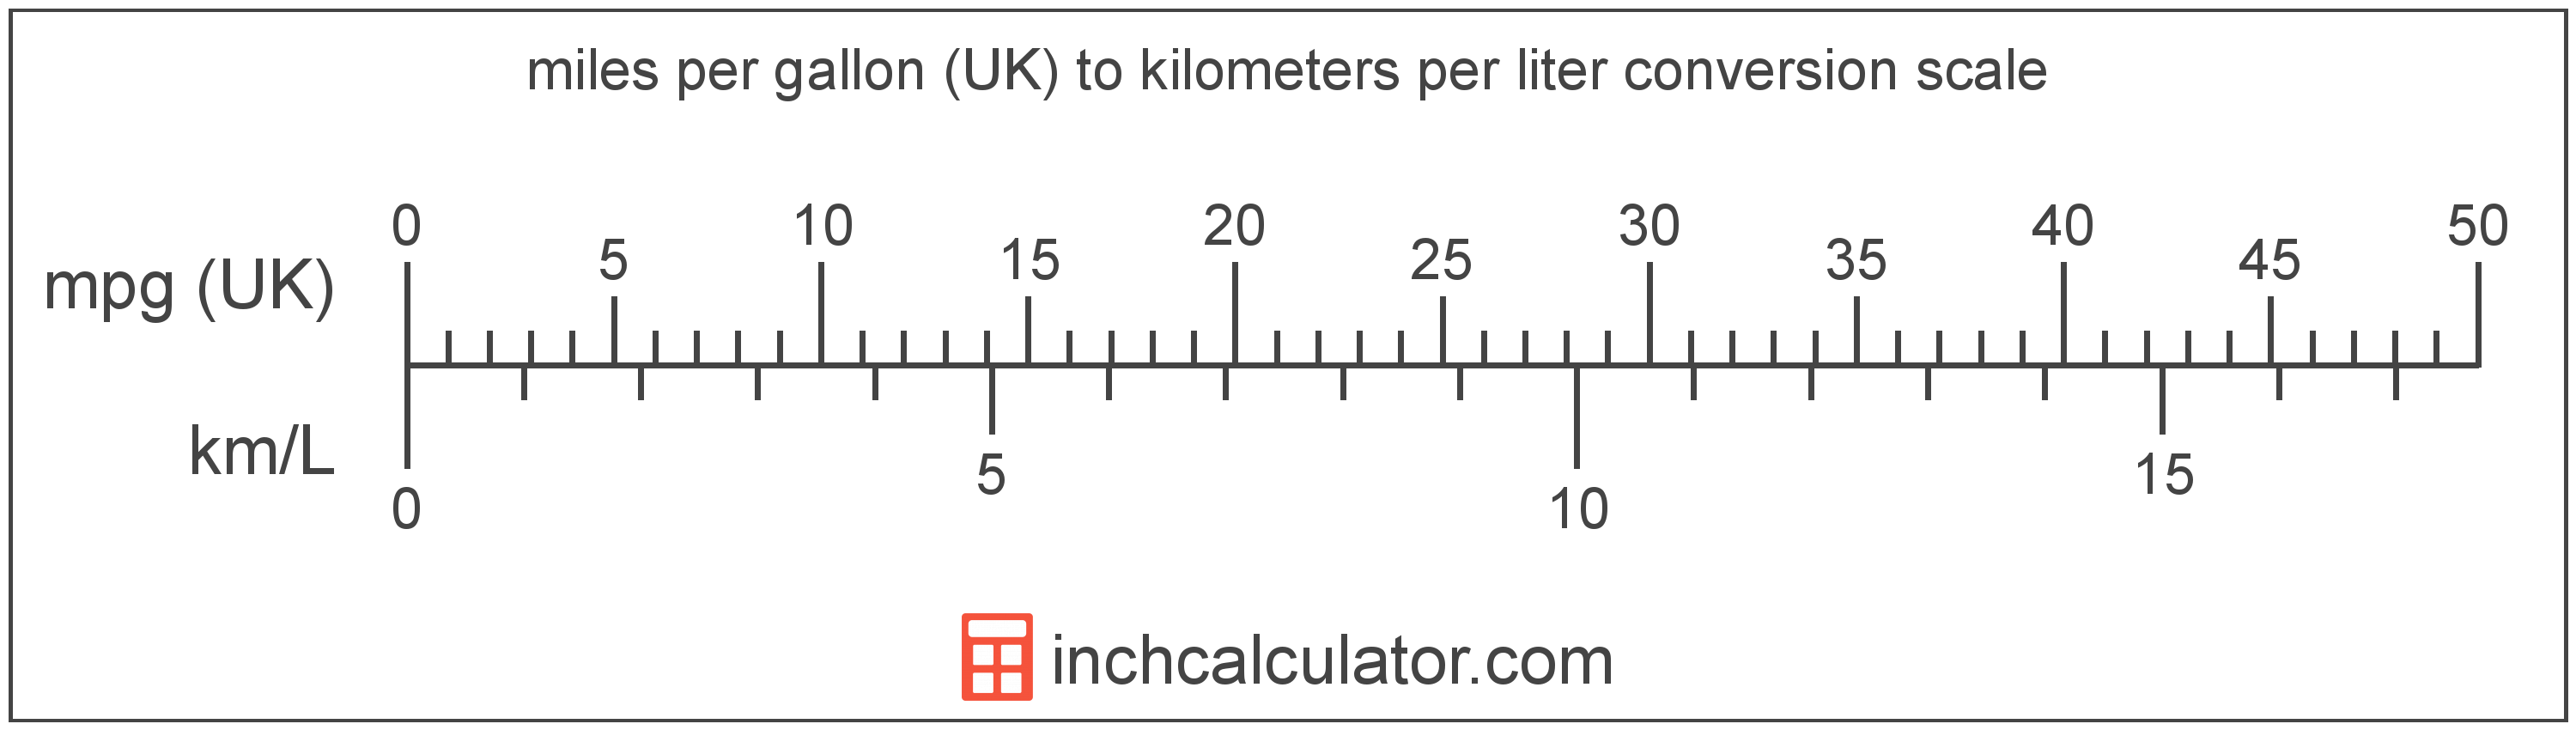 conversion scale showing kilometers per liter and equivalent miles per gallon (UK) fuel economy values